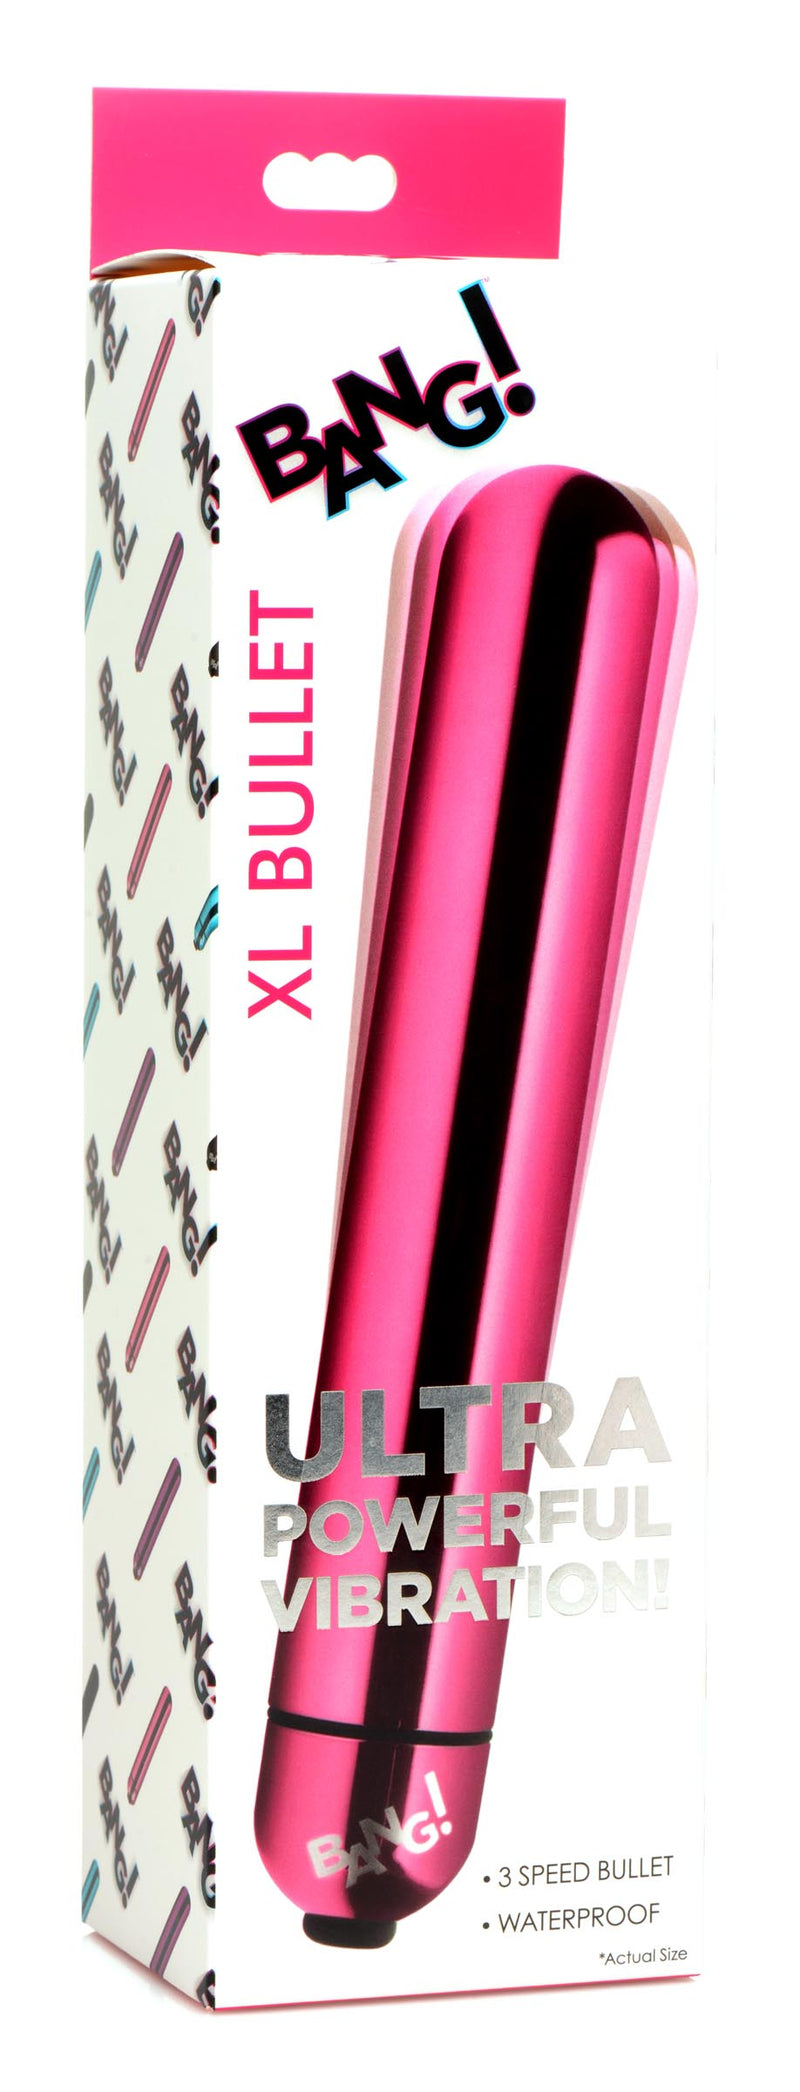 XL Vibrating Metallic Bullet - Pink bullet-vibrators from Bang